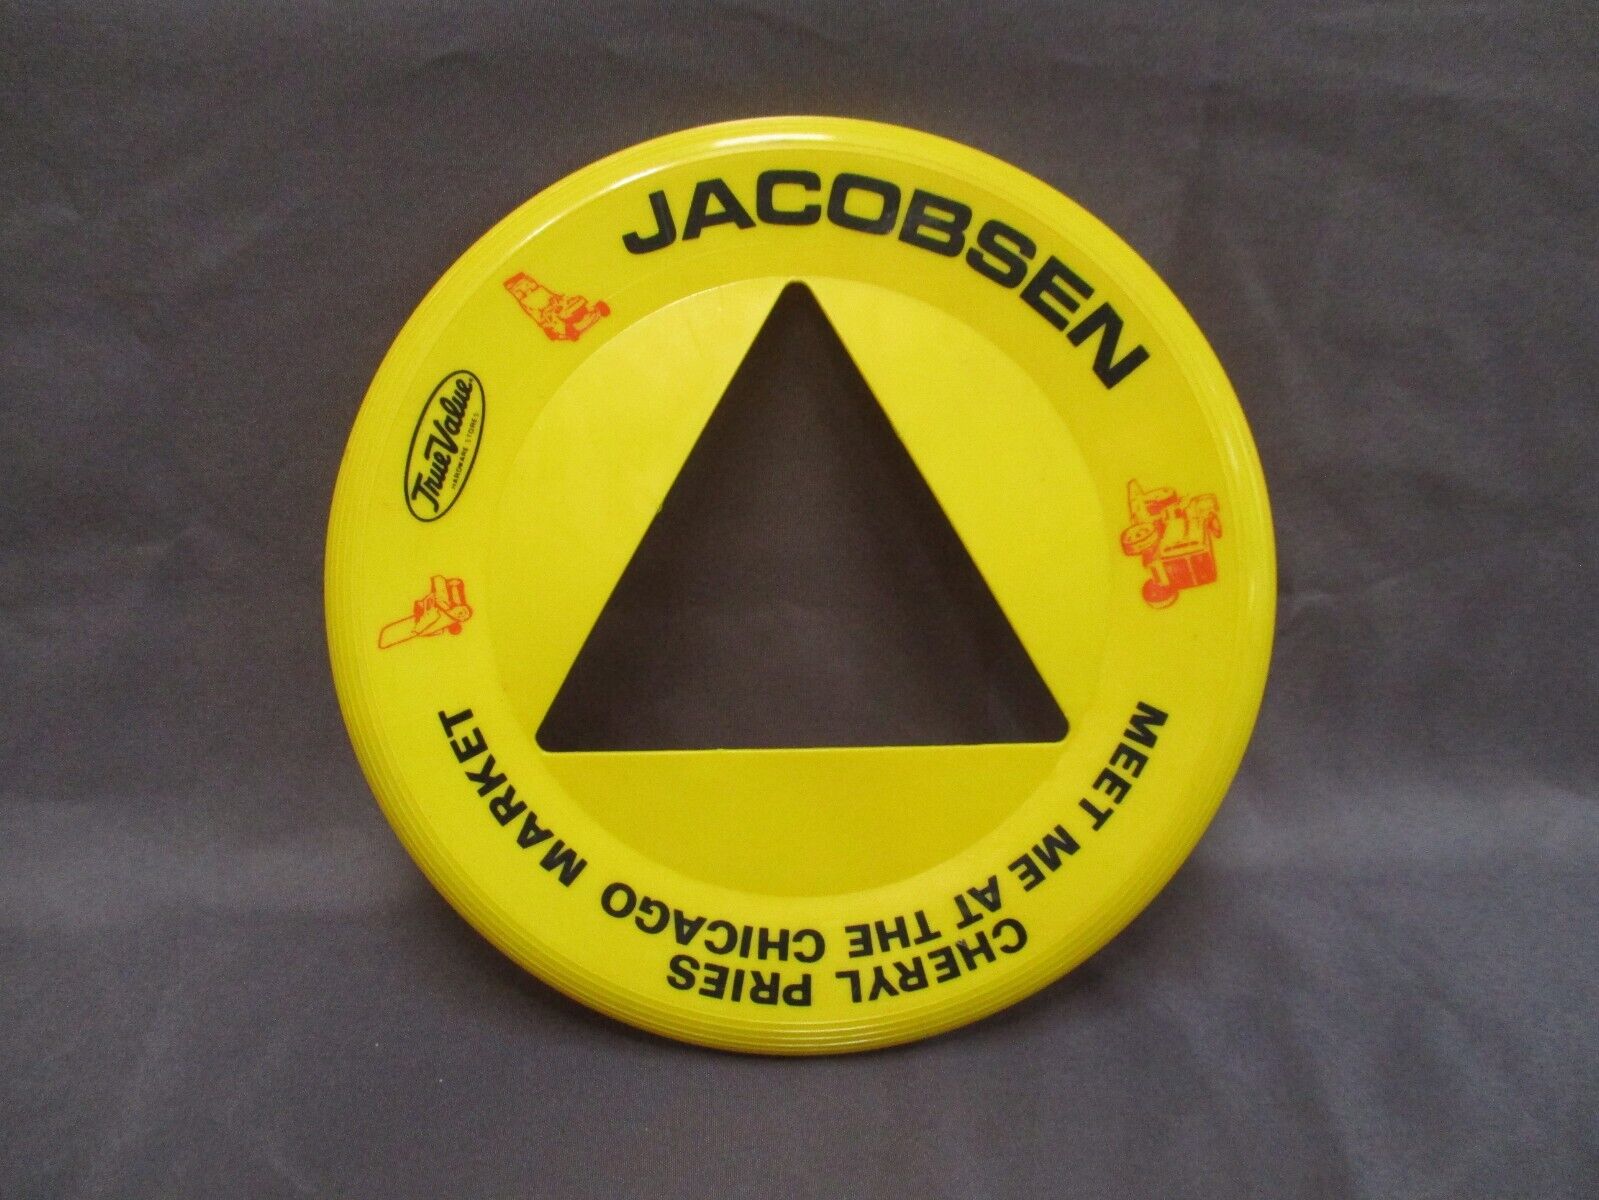 Vintage Jacobsen Lawn Mower Promotional Advertisement Frisbee Flying Disc